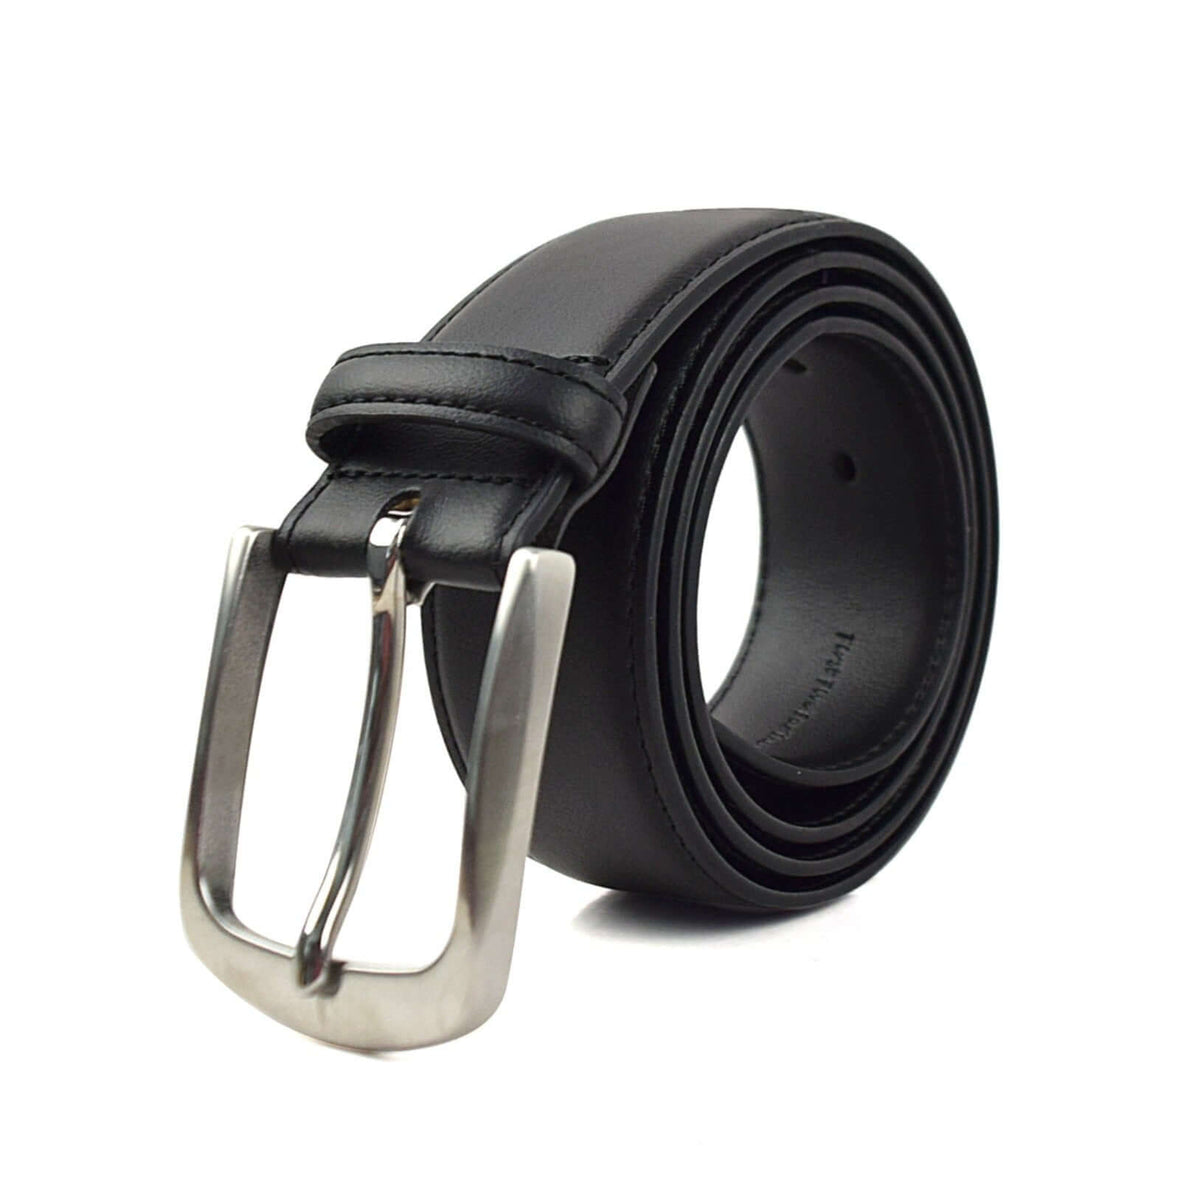 Styles Modern Men Belts Leather Belt (Formal/Casual) (Colour - Black (26-36)